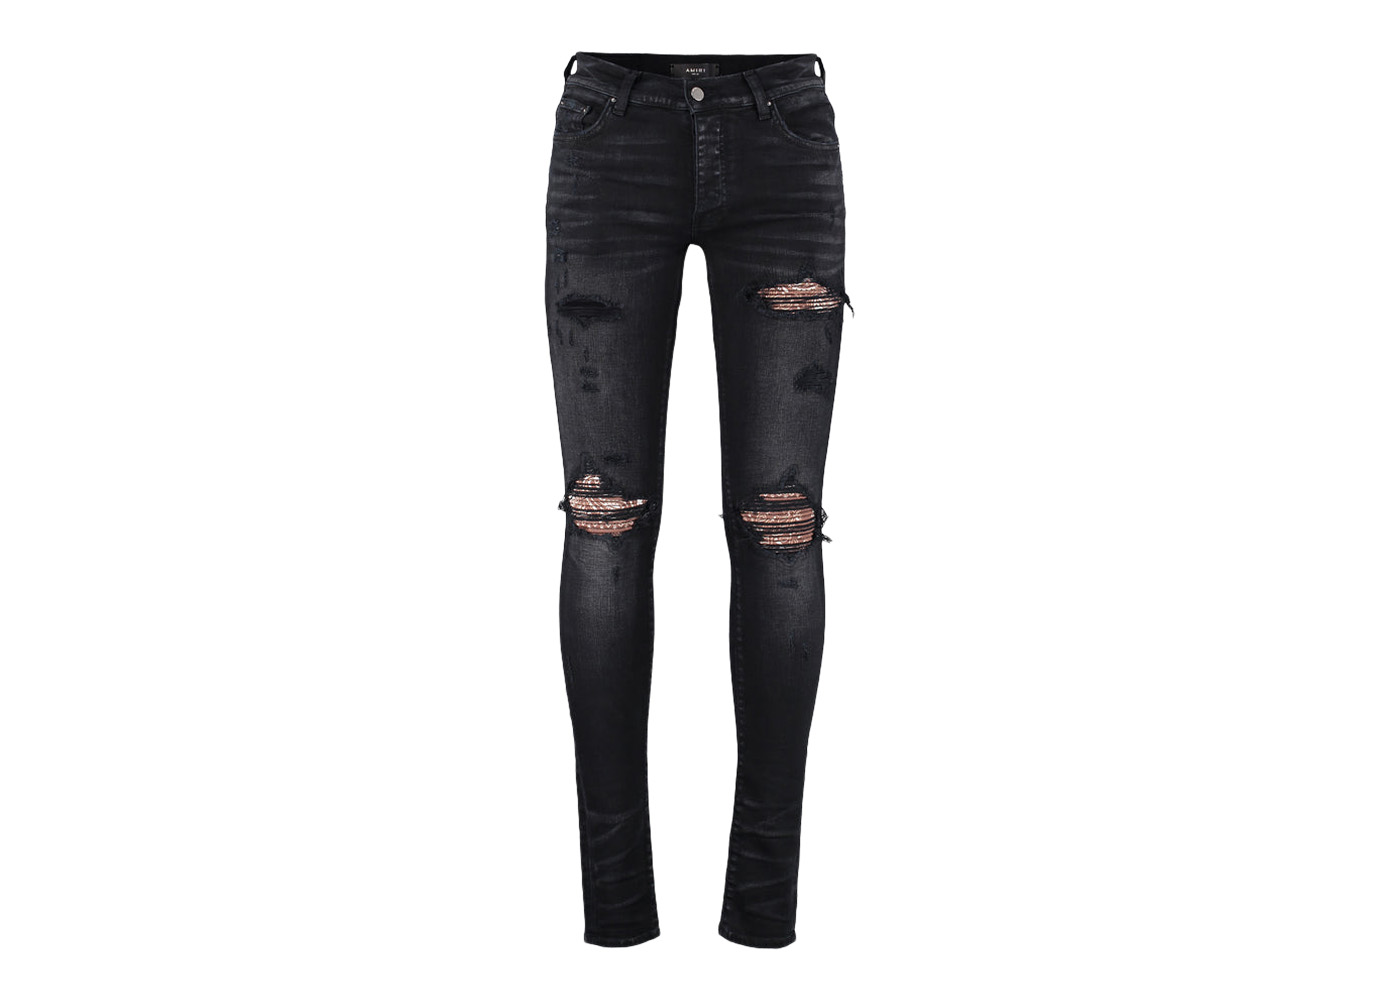 AMIRI MX1 Bandana Destroyed Skinny Fit Jeans Black/Brown